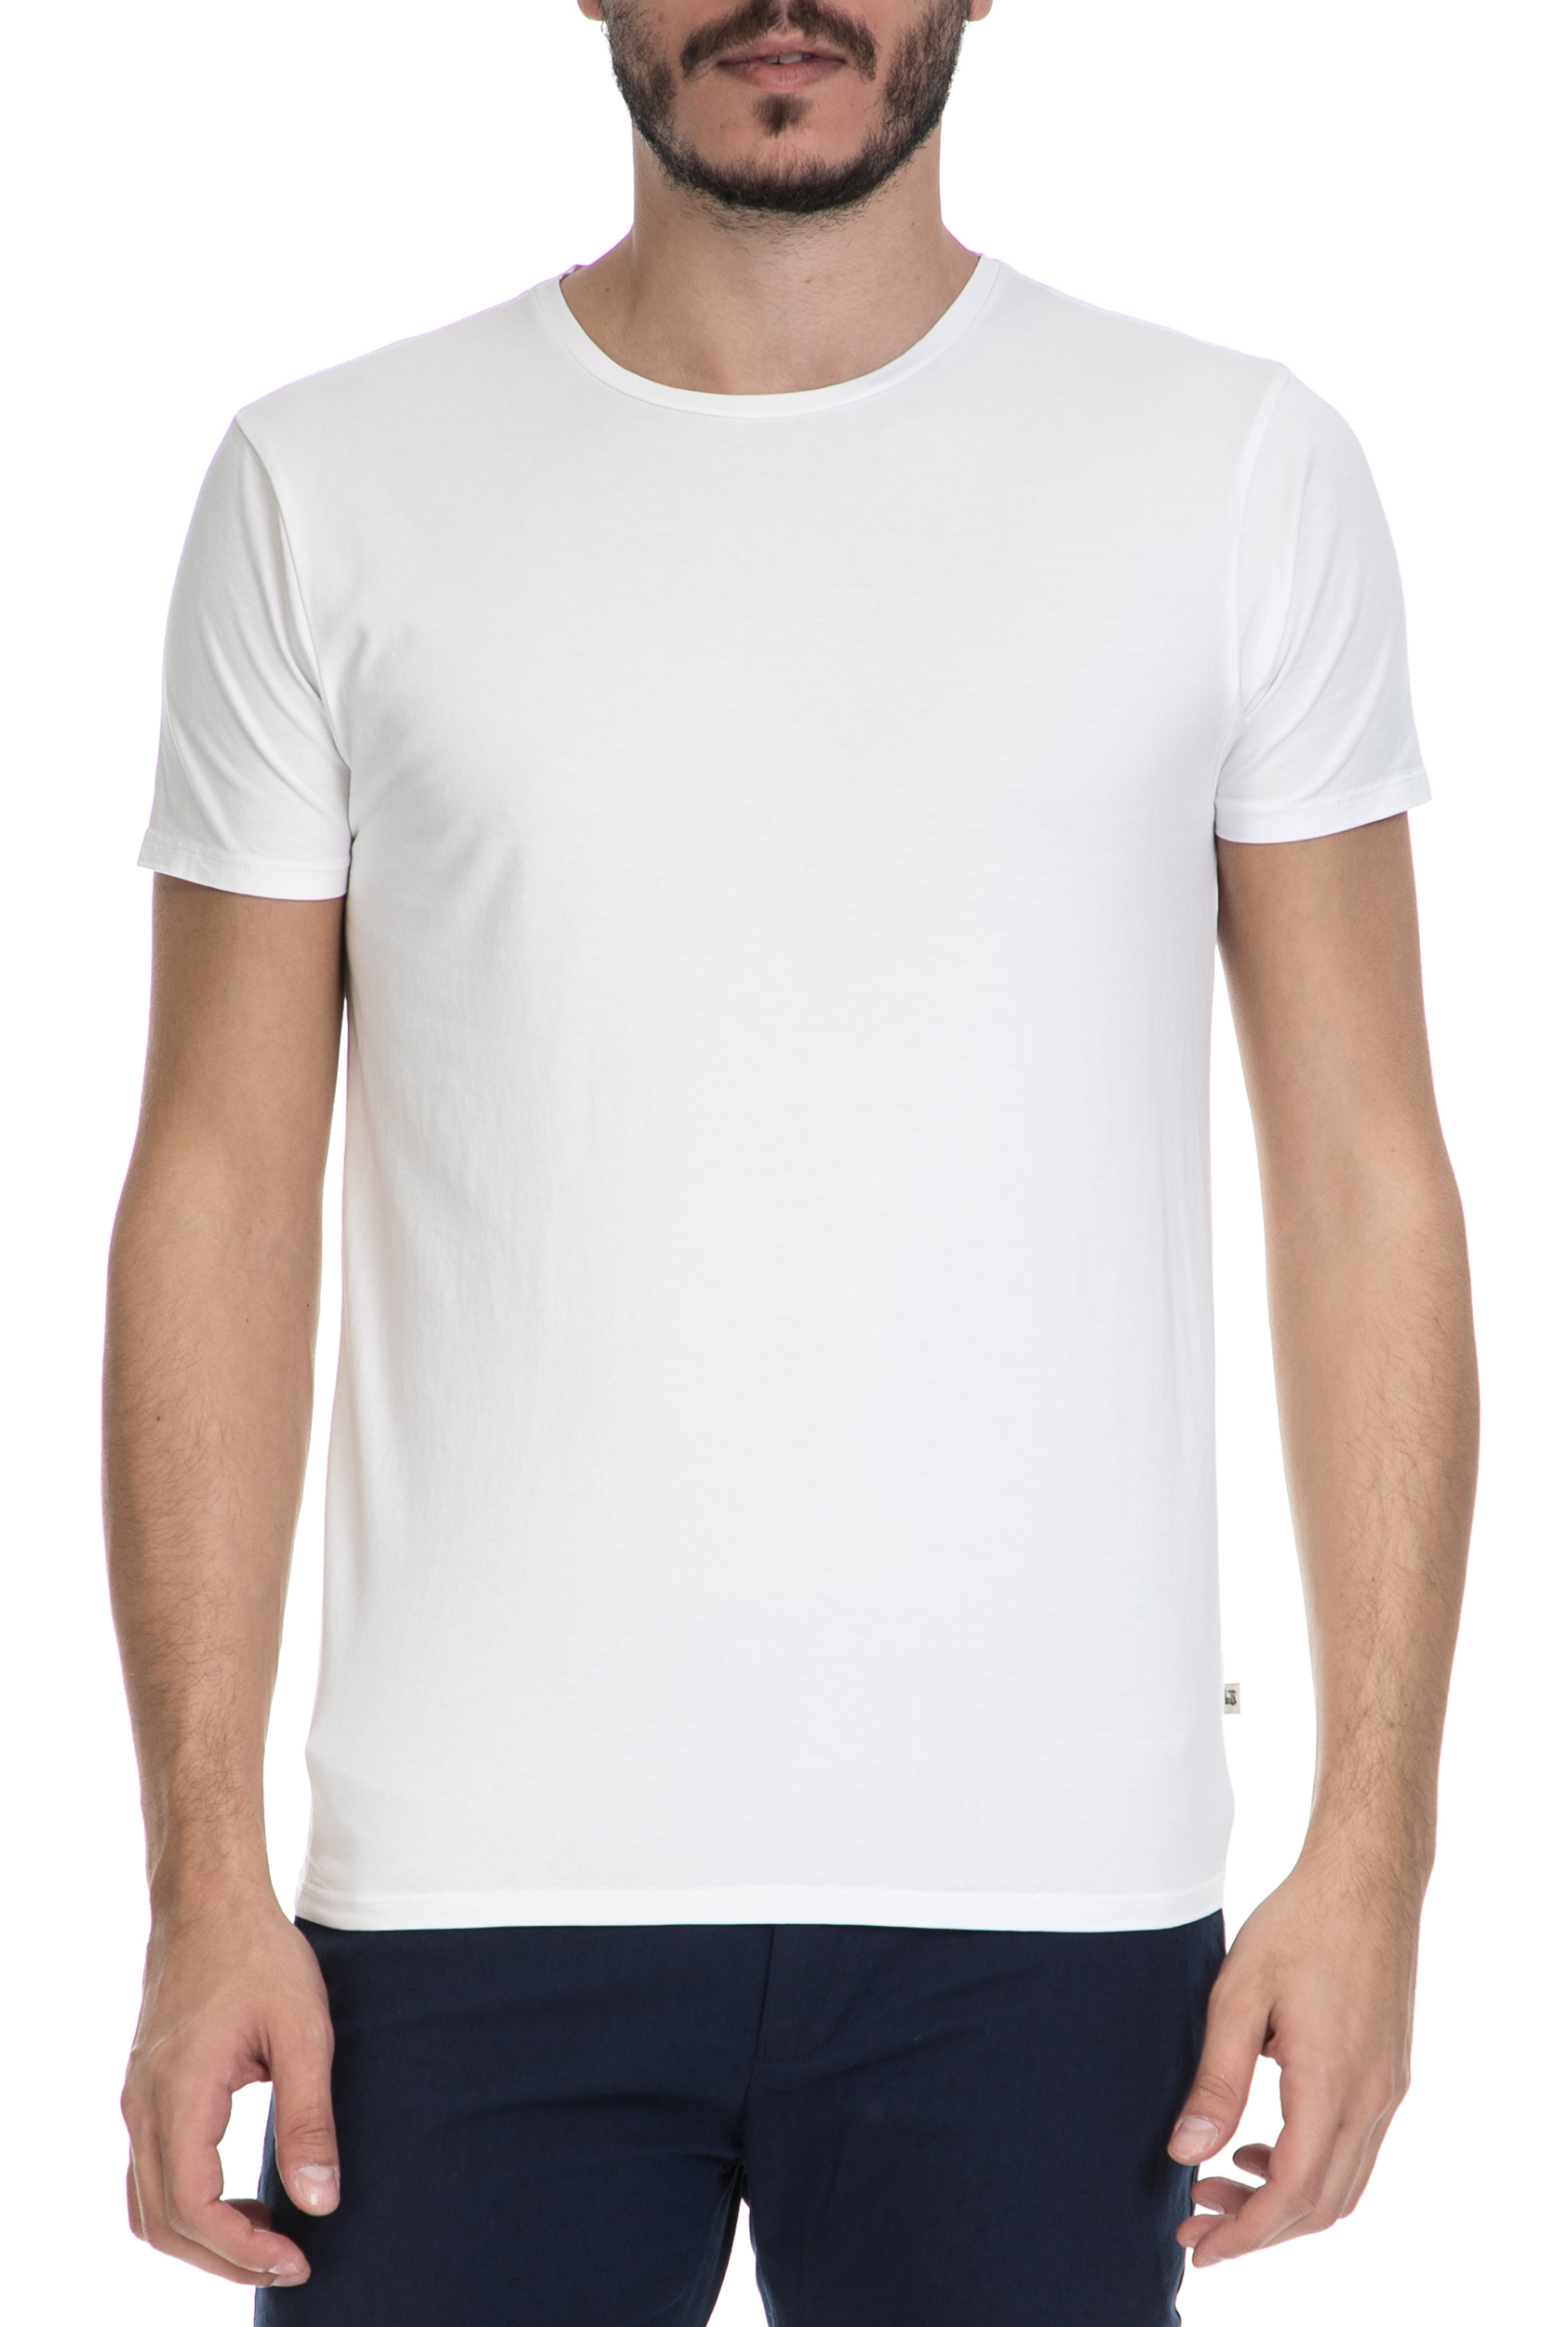 SCOTCH & SODA SCOTCH & SODA - Ανδρικό T-shirt NOS SCOTCH & SODA λευκό